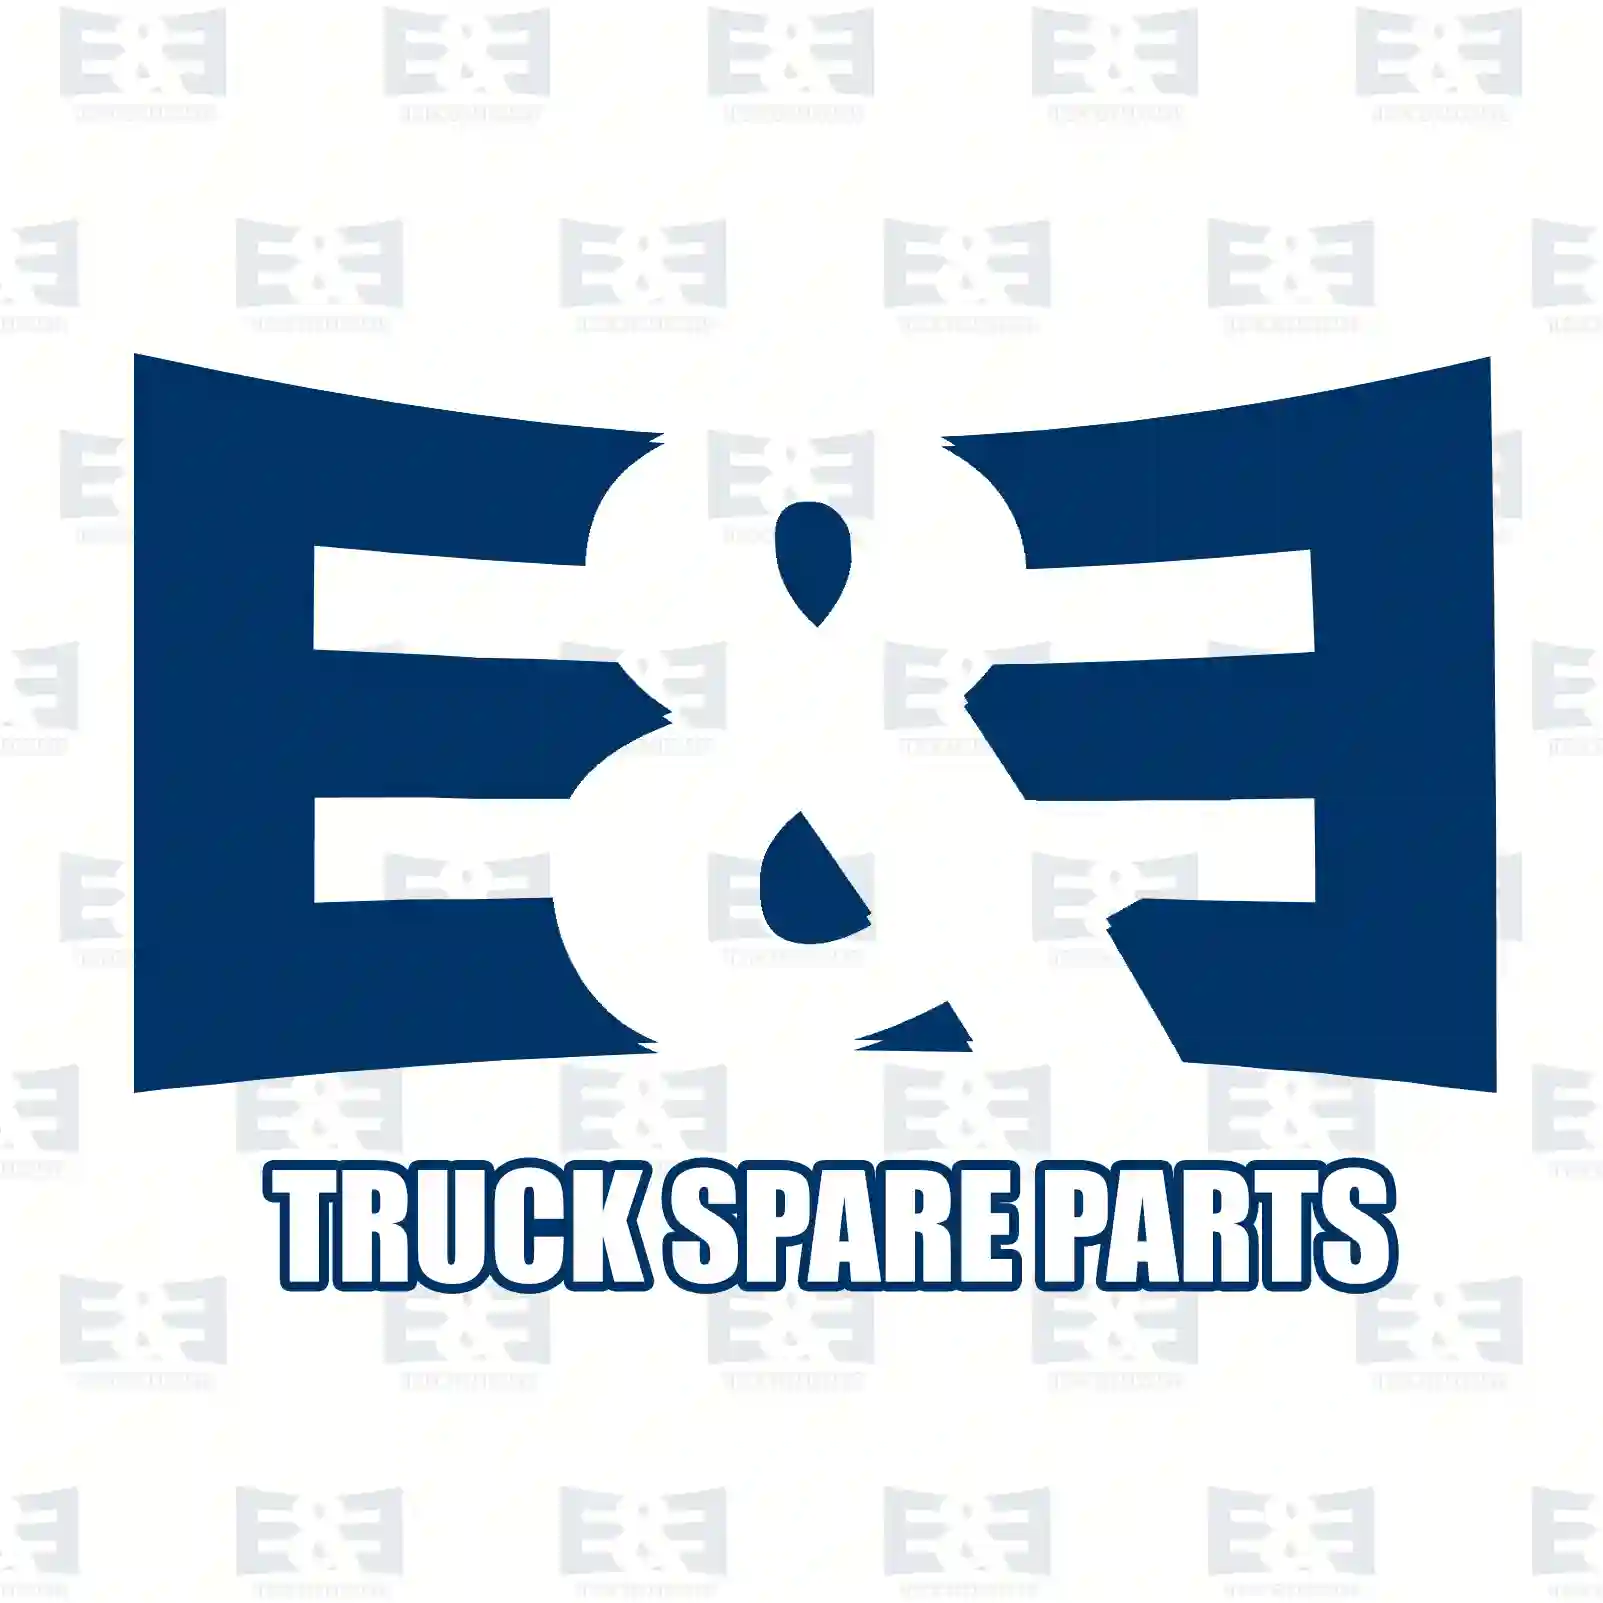  Clutch Kit (Cover & Disc) Clutch cover, EE No 2E2288659 ,  oem no:0012500304, 0012500404, 0012509004, 0022506104, 0022506404, 0022509404, 0022509504, 0022509604, 002250960480, 0022509704, 040120289, 040140300, 8383155000 E&E Truck Spare Parts | Truck Spare Parts, Auotomotive Spare Parts